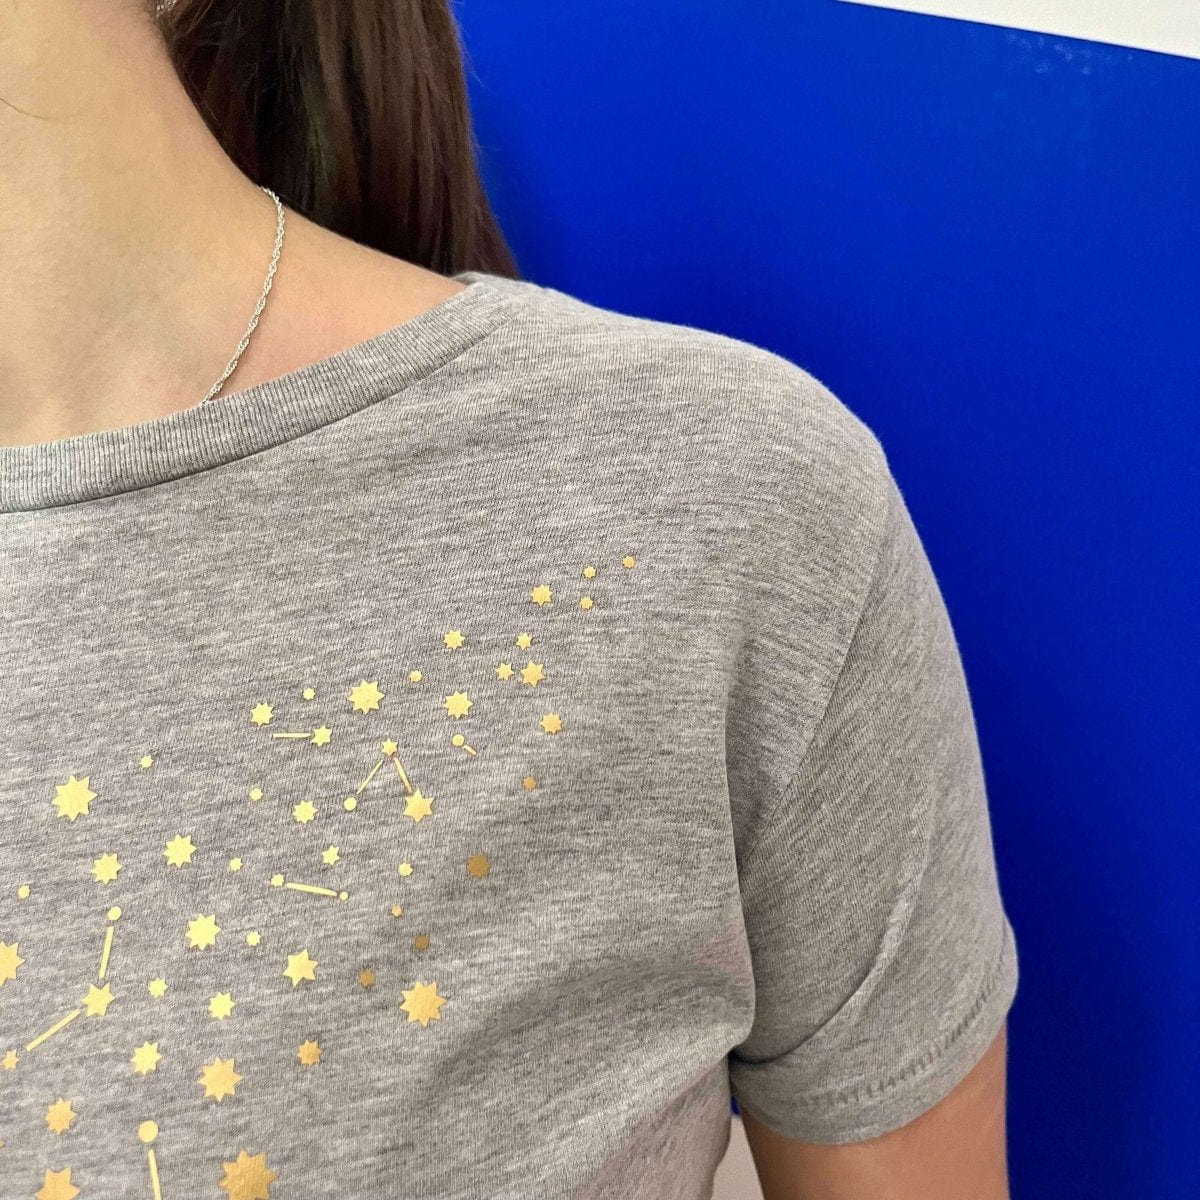 Constellation Shirt